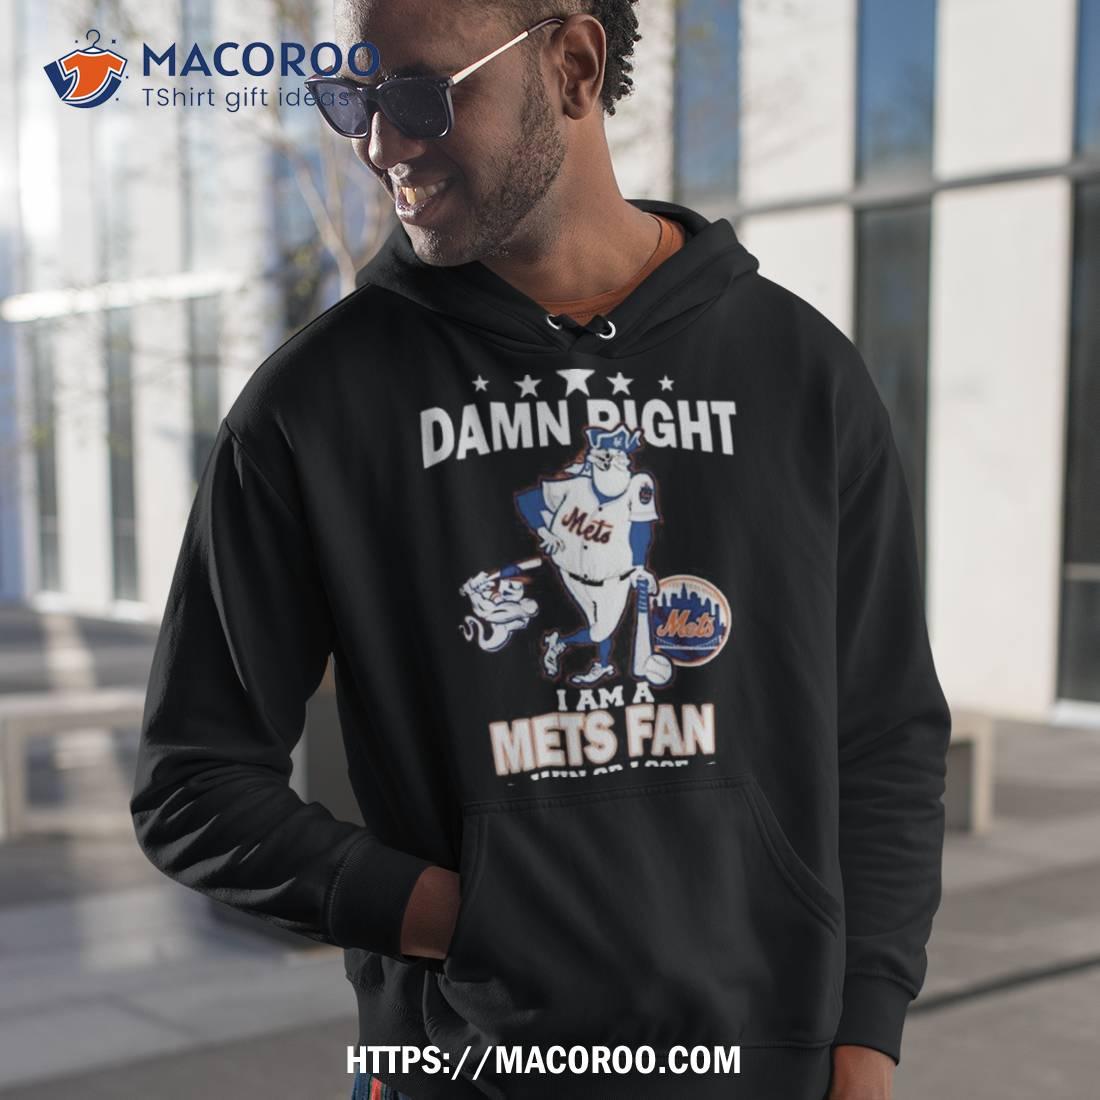 New York Mets MLB Hawaiian Shirt For Men And Women Fans